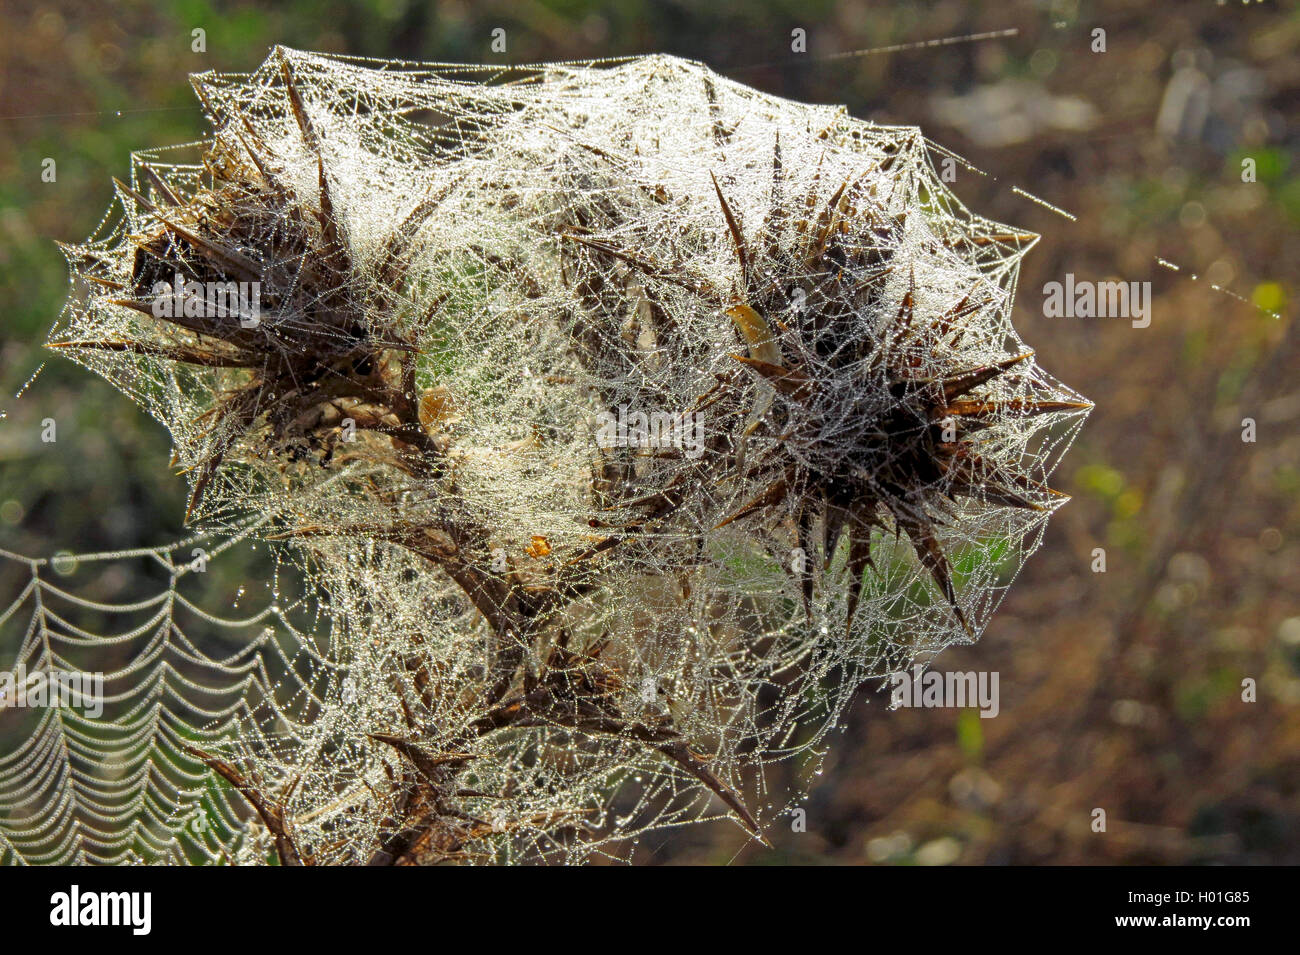 taubenetztes Spinnennetz ueber Disteln, Spanien | spiderweb with dewdrops over inflorescence of thistles, Spain | BLWS427096.jpg Stock Photo